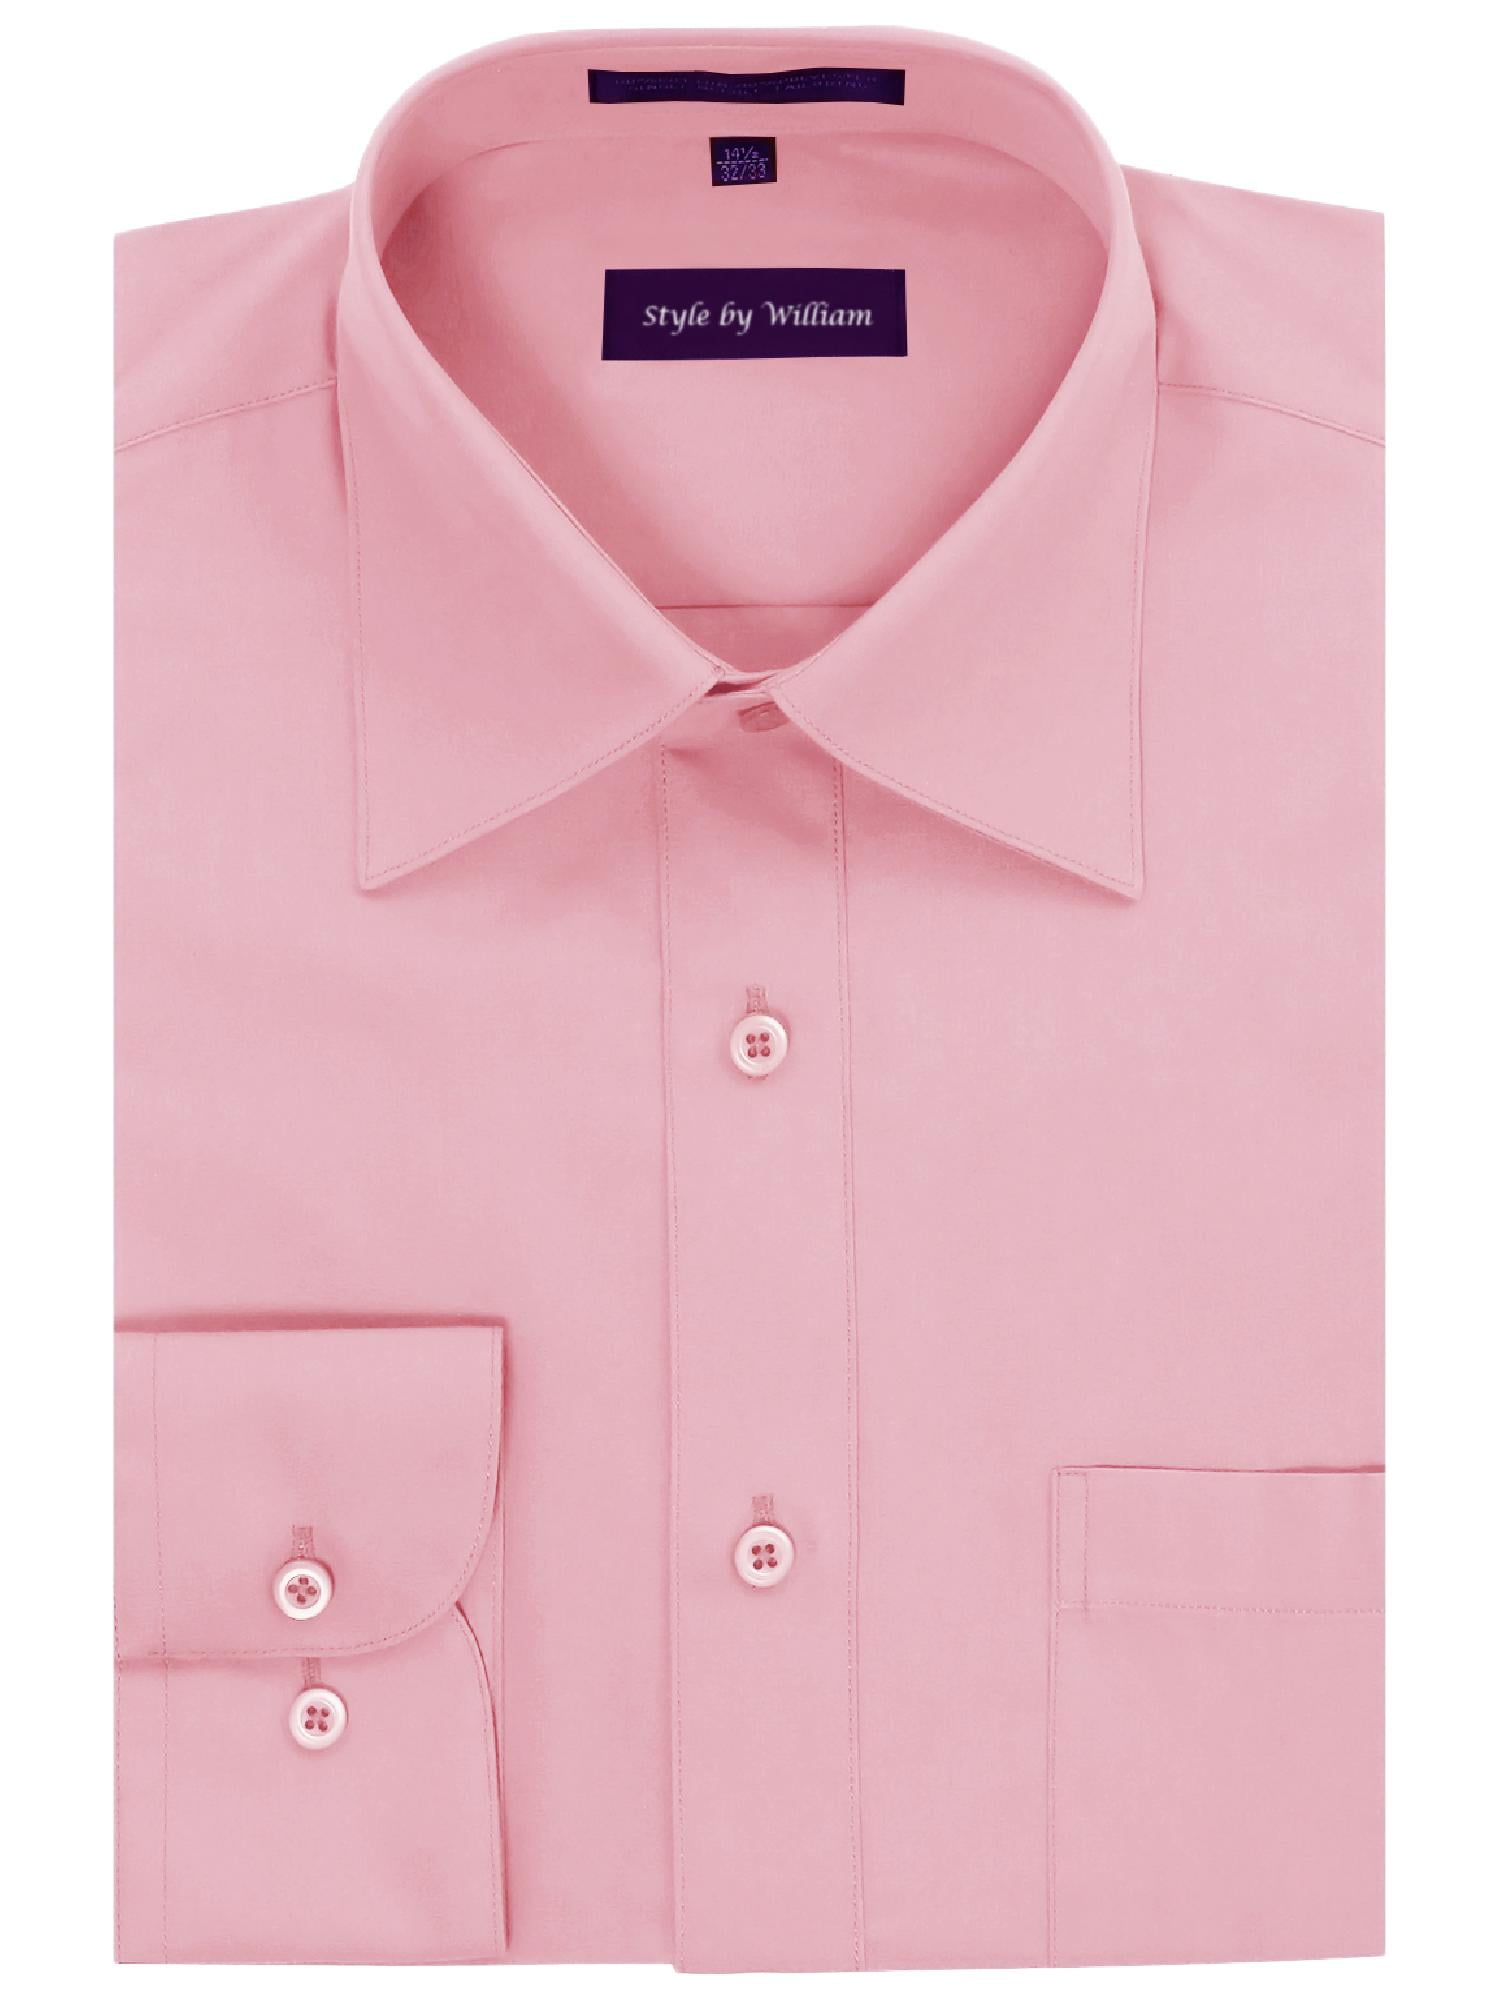 FashionOutfit Men's Regular Fit Dress Shirt - Walmart.com